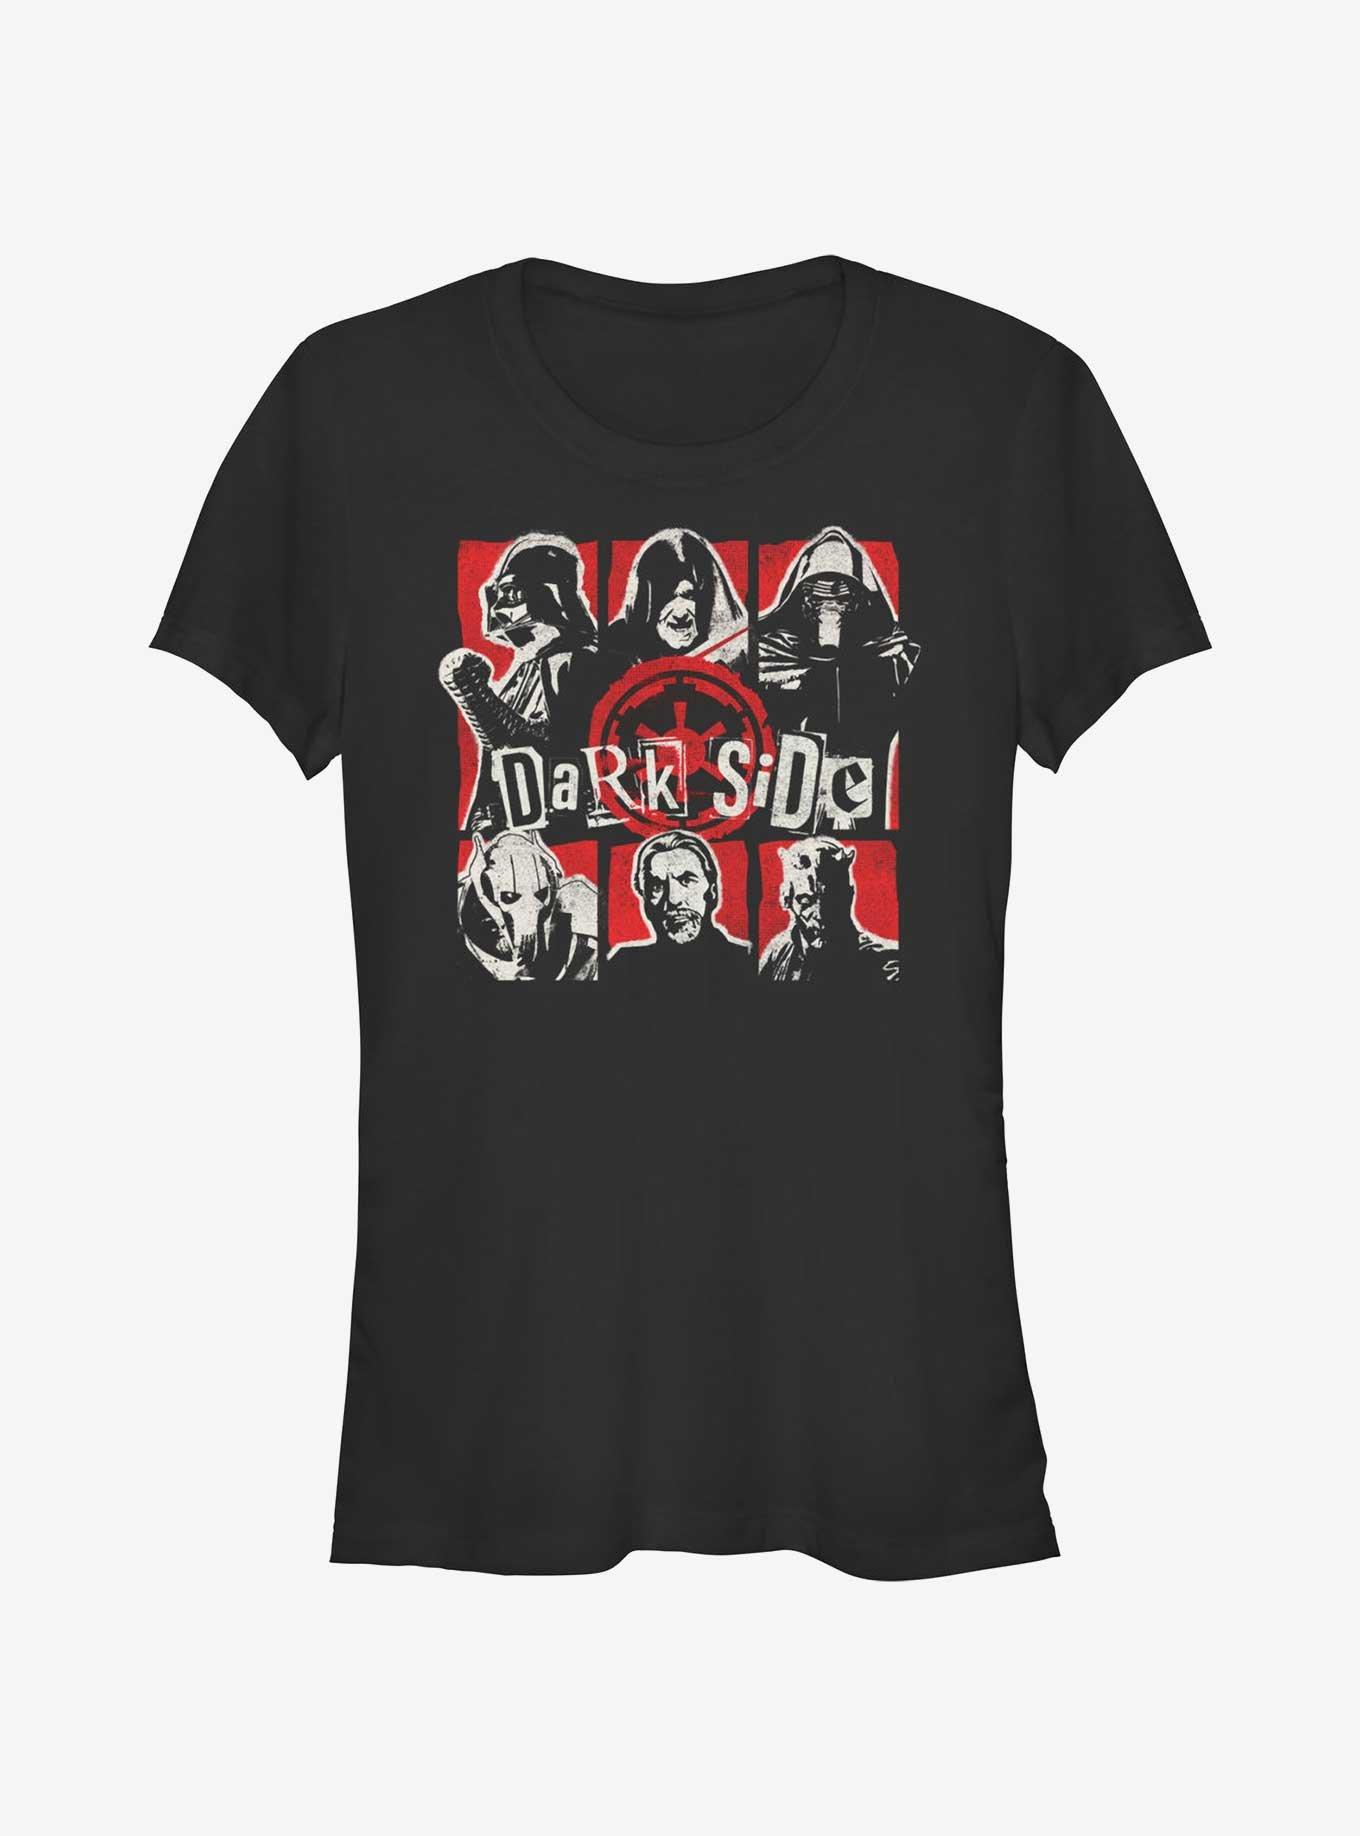 Star Wars Year of the Dark Side Box Up Girls T-Shirt